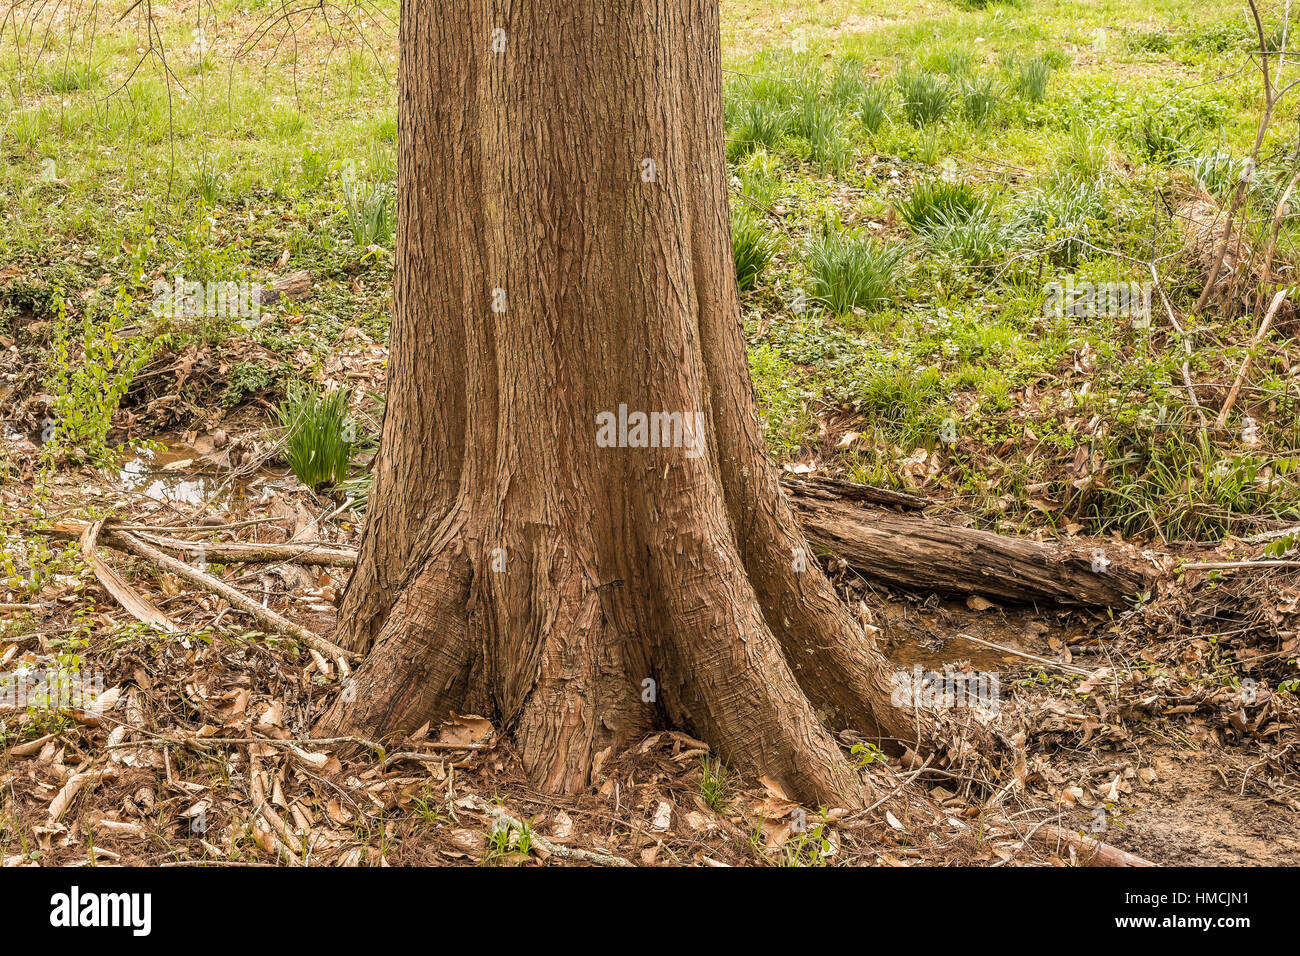 Cypress Tree Trunk on grassy background. Stock Photo